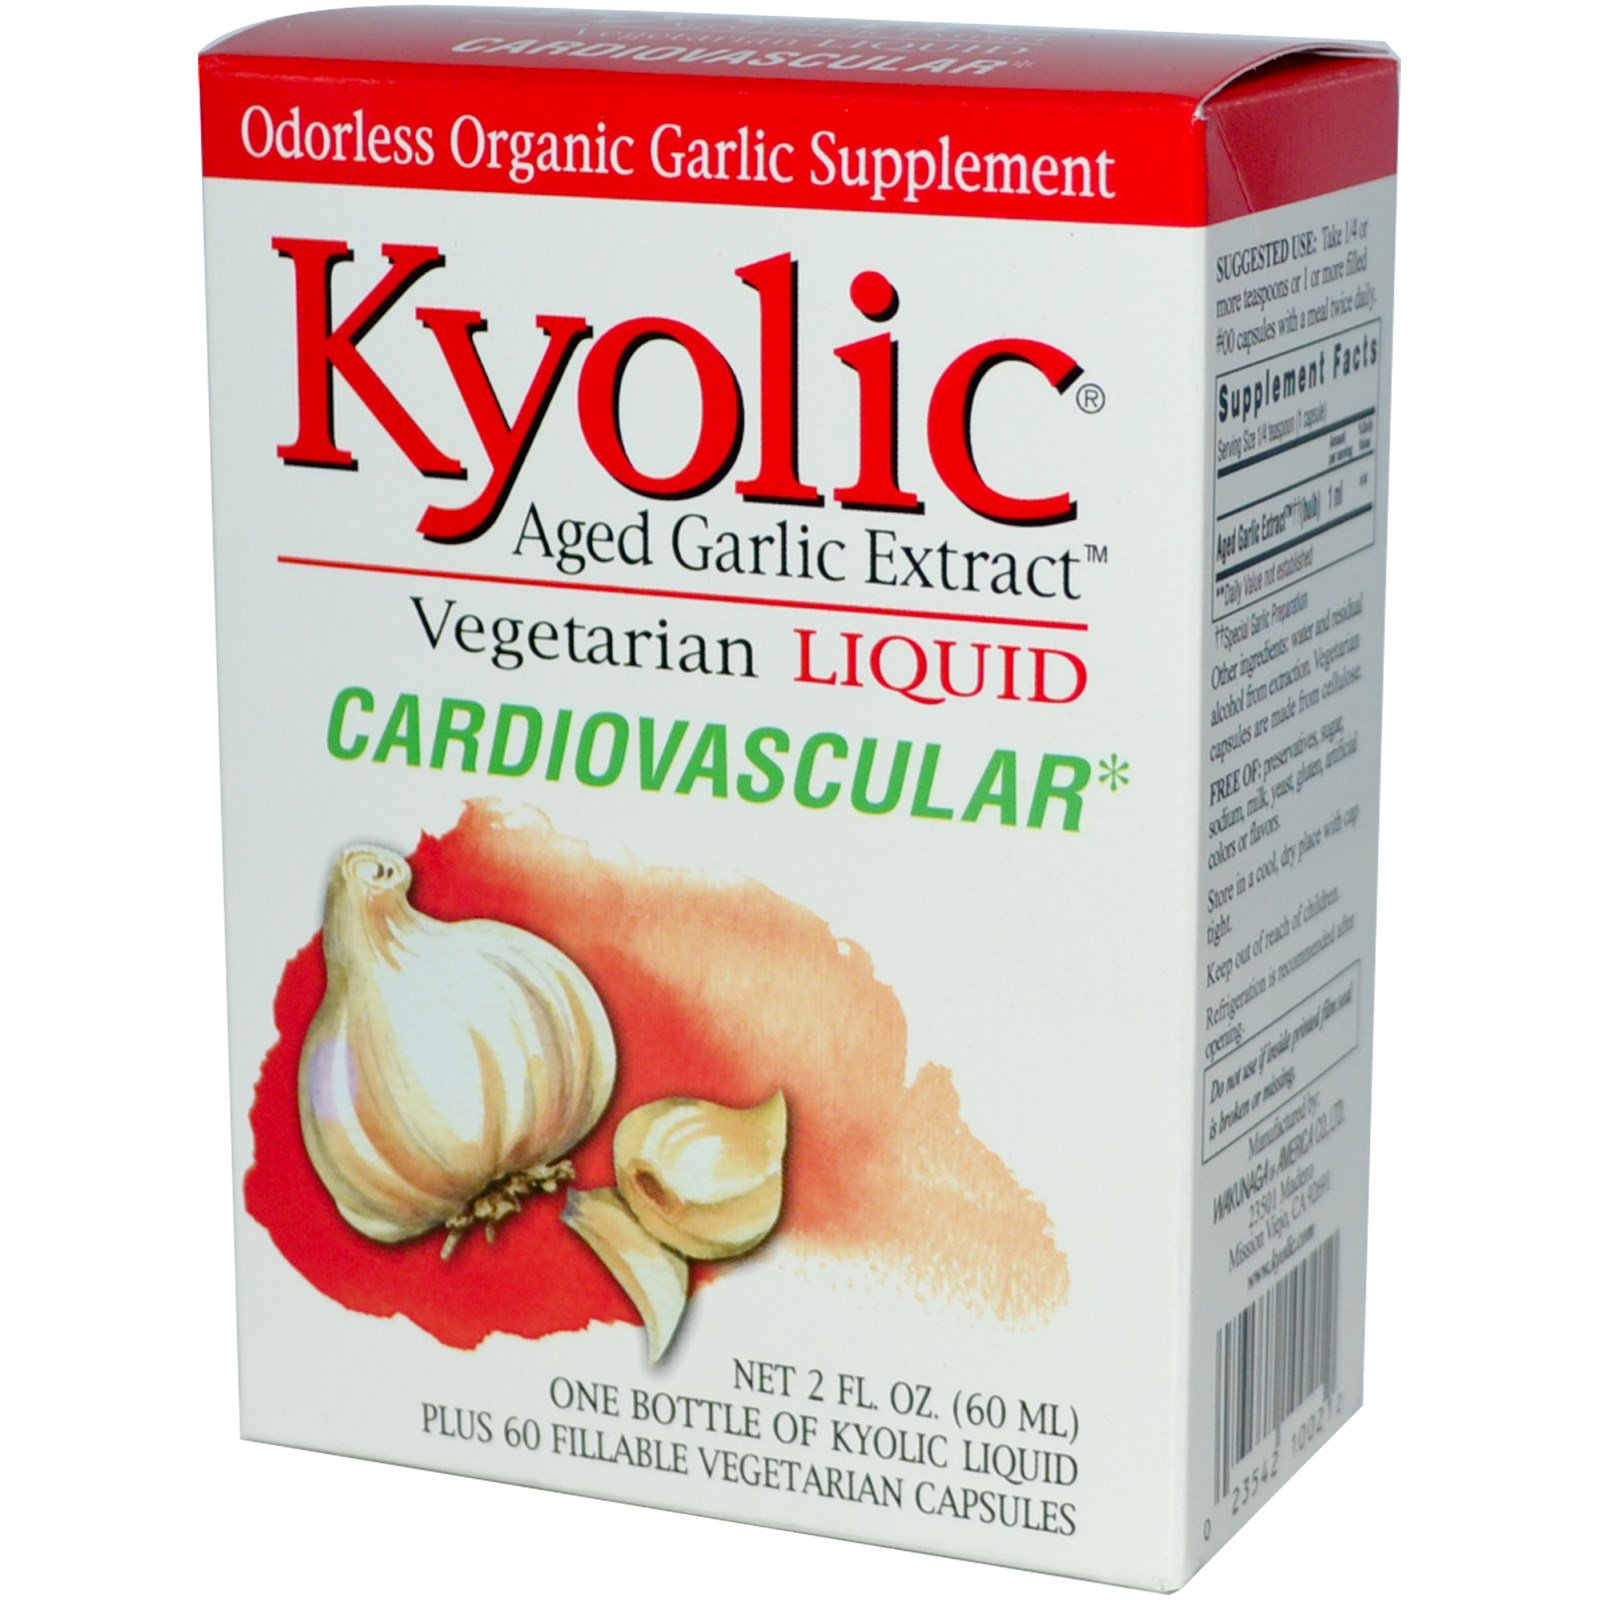 Extract first. Kyolic aged garlic extract. Чеснок Kyolic. Kyolic aged garlic extract купить. Kyolic cholesterol купить.